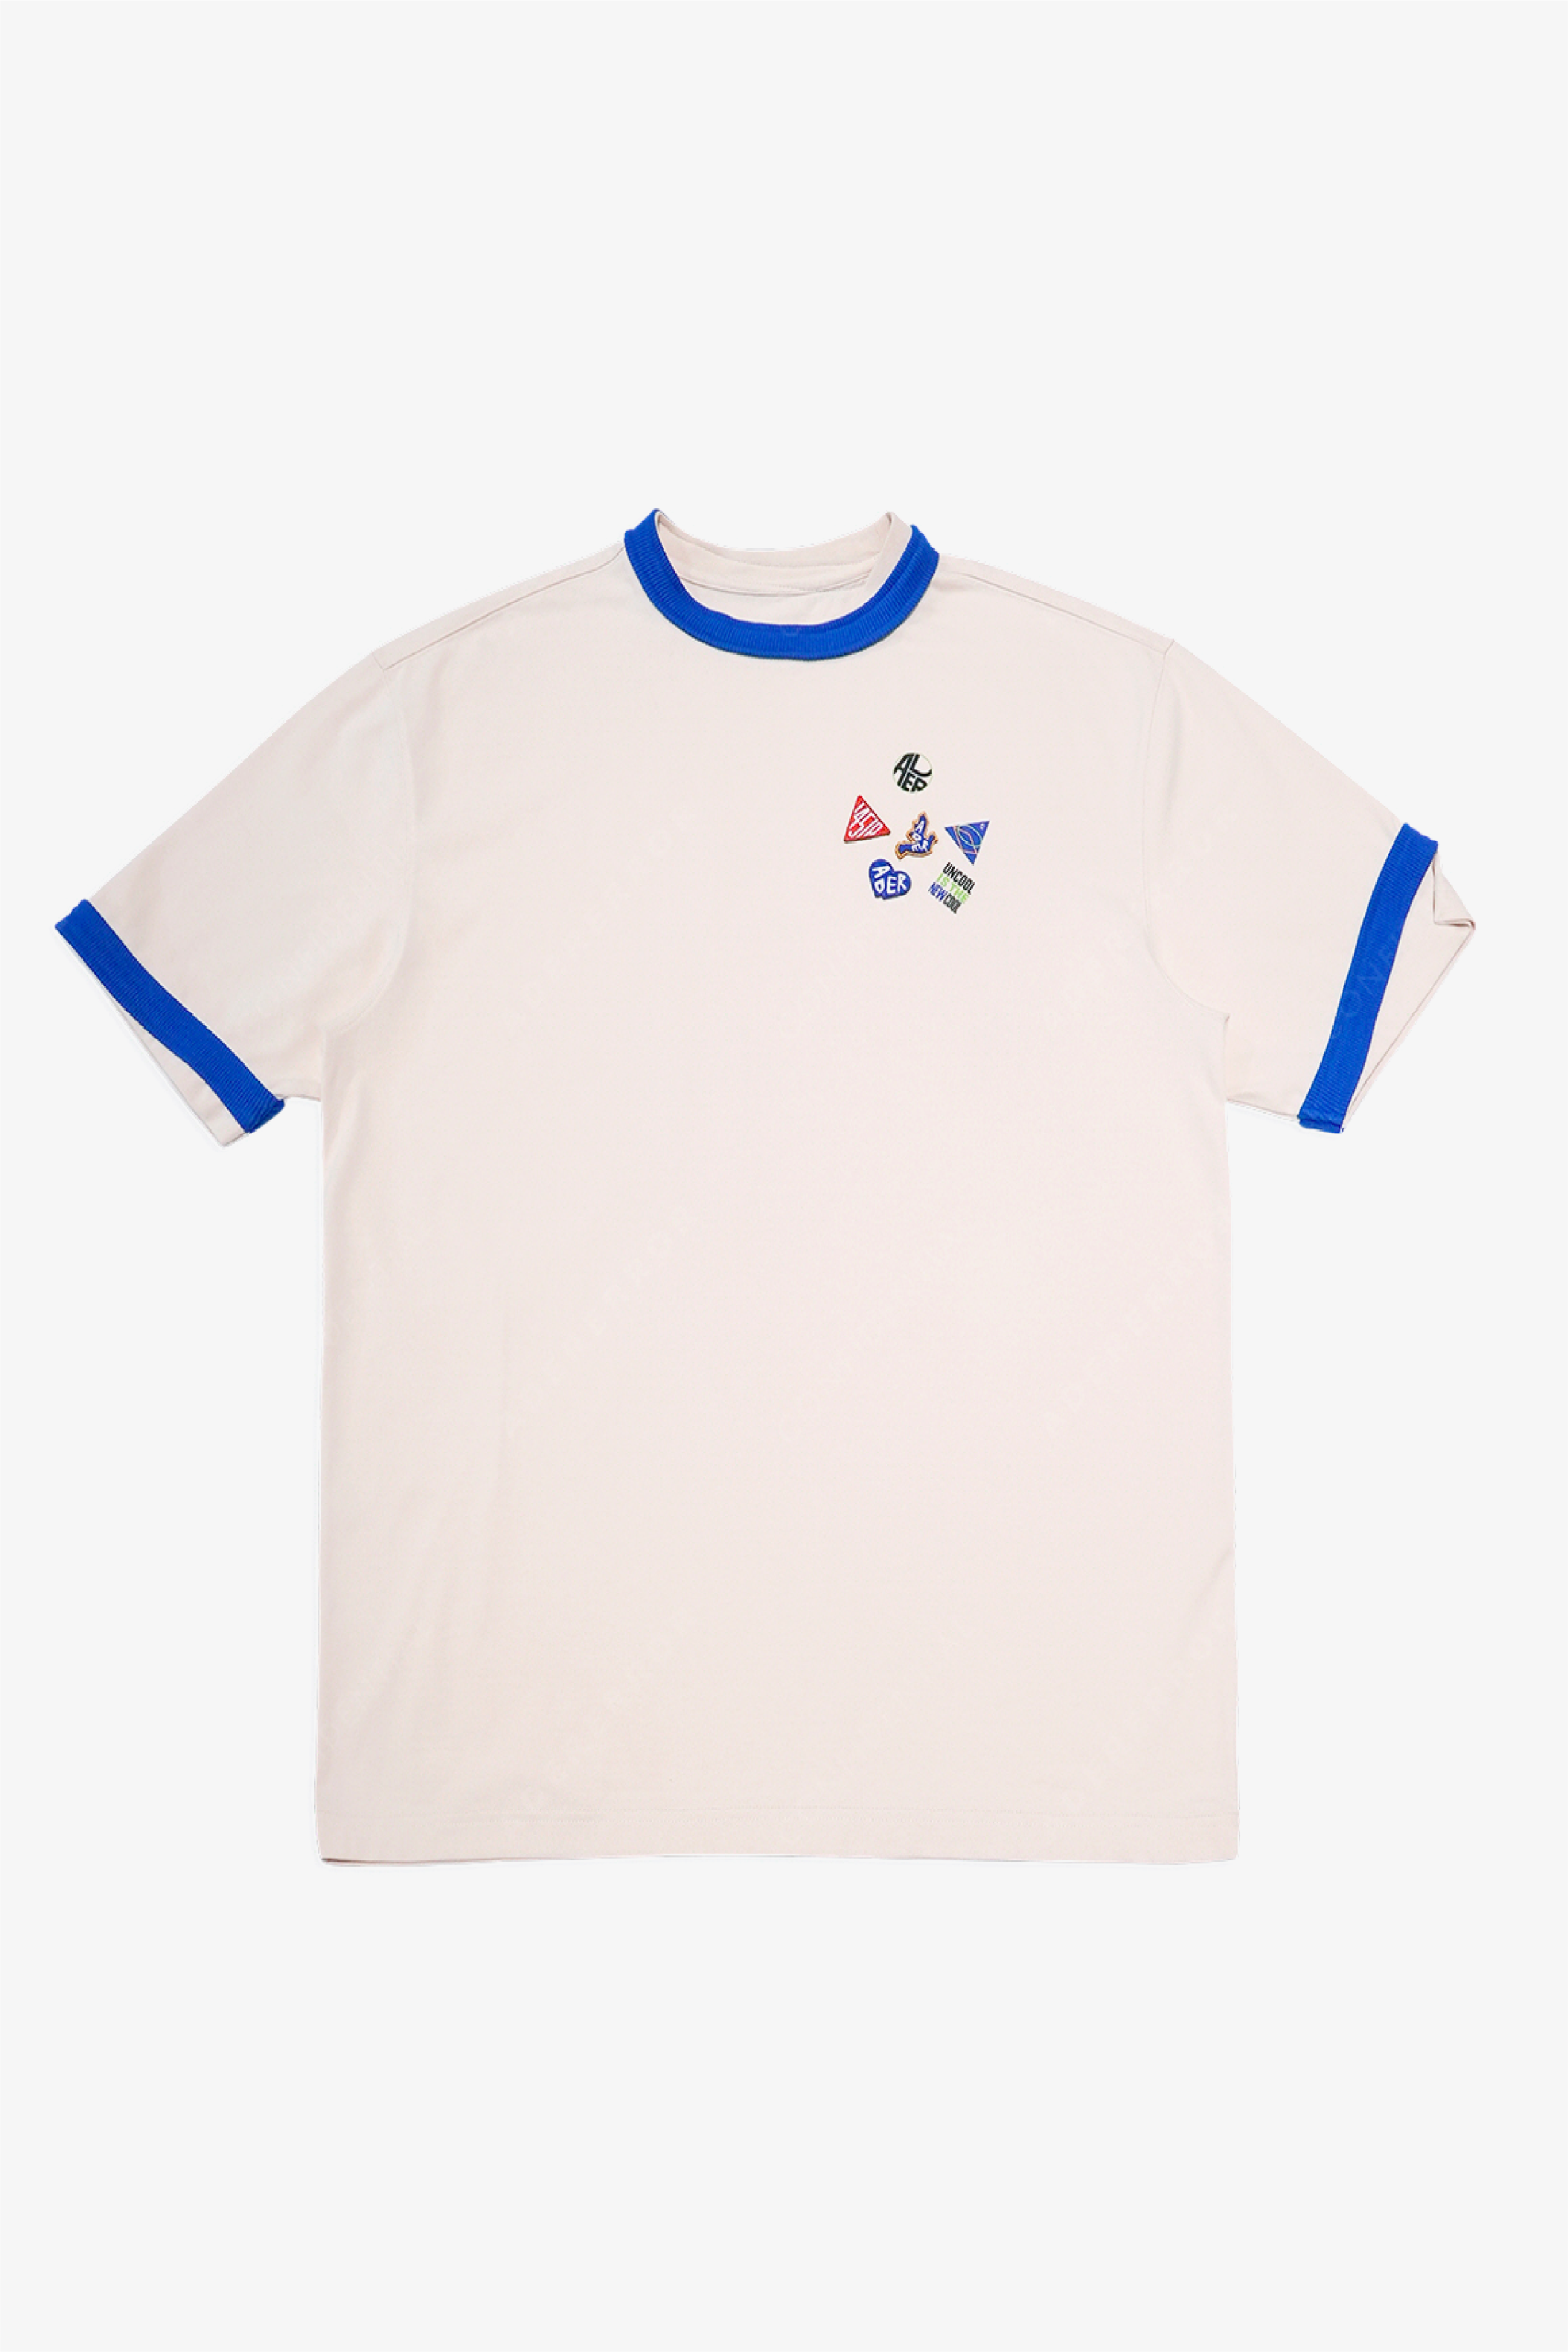 Selectshop FRAME - ADER ERROR Badge Tee T-Shirts Dubai